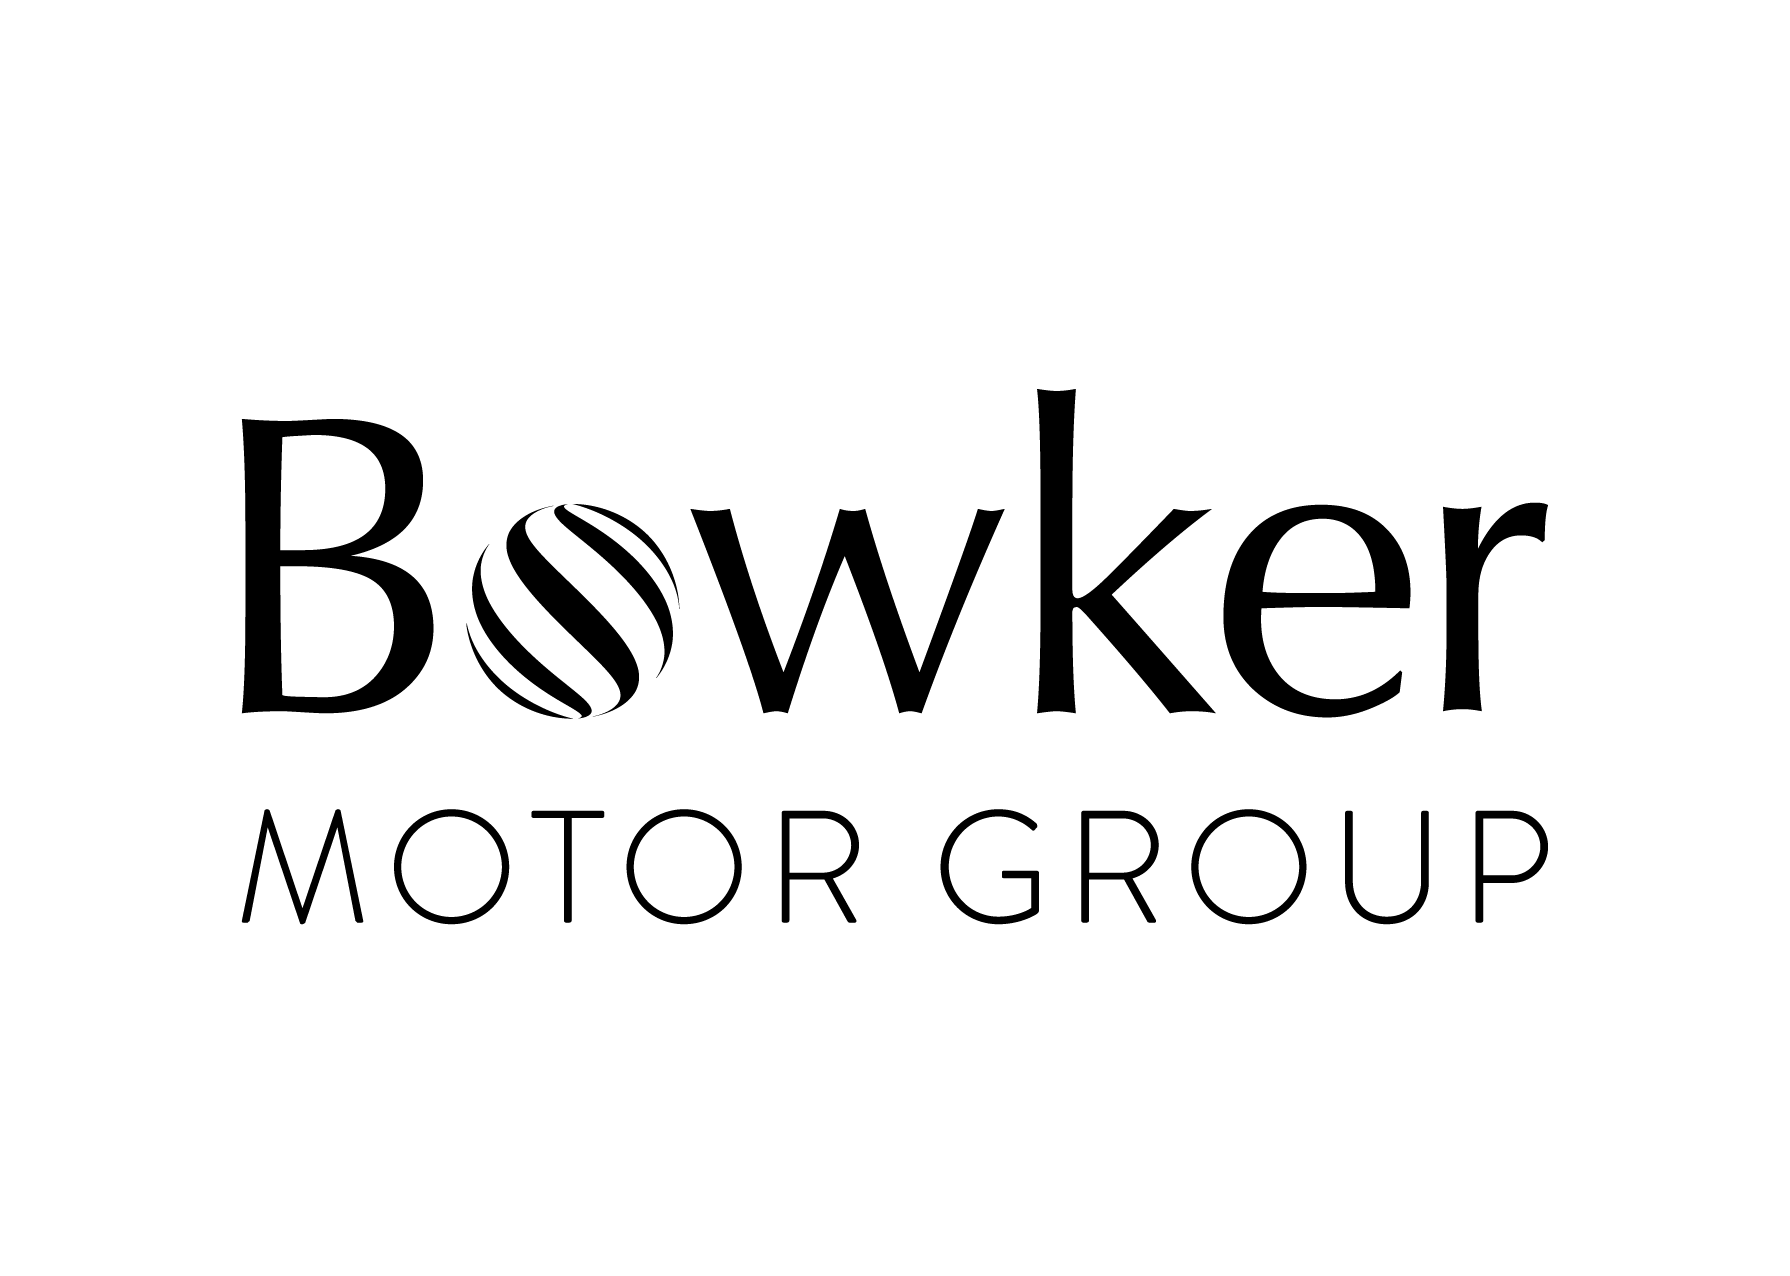 Bowker Motor Group Logo